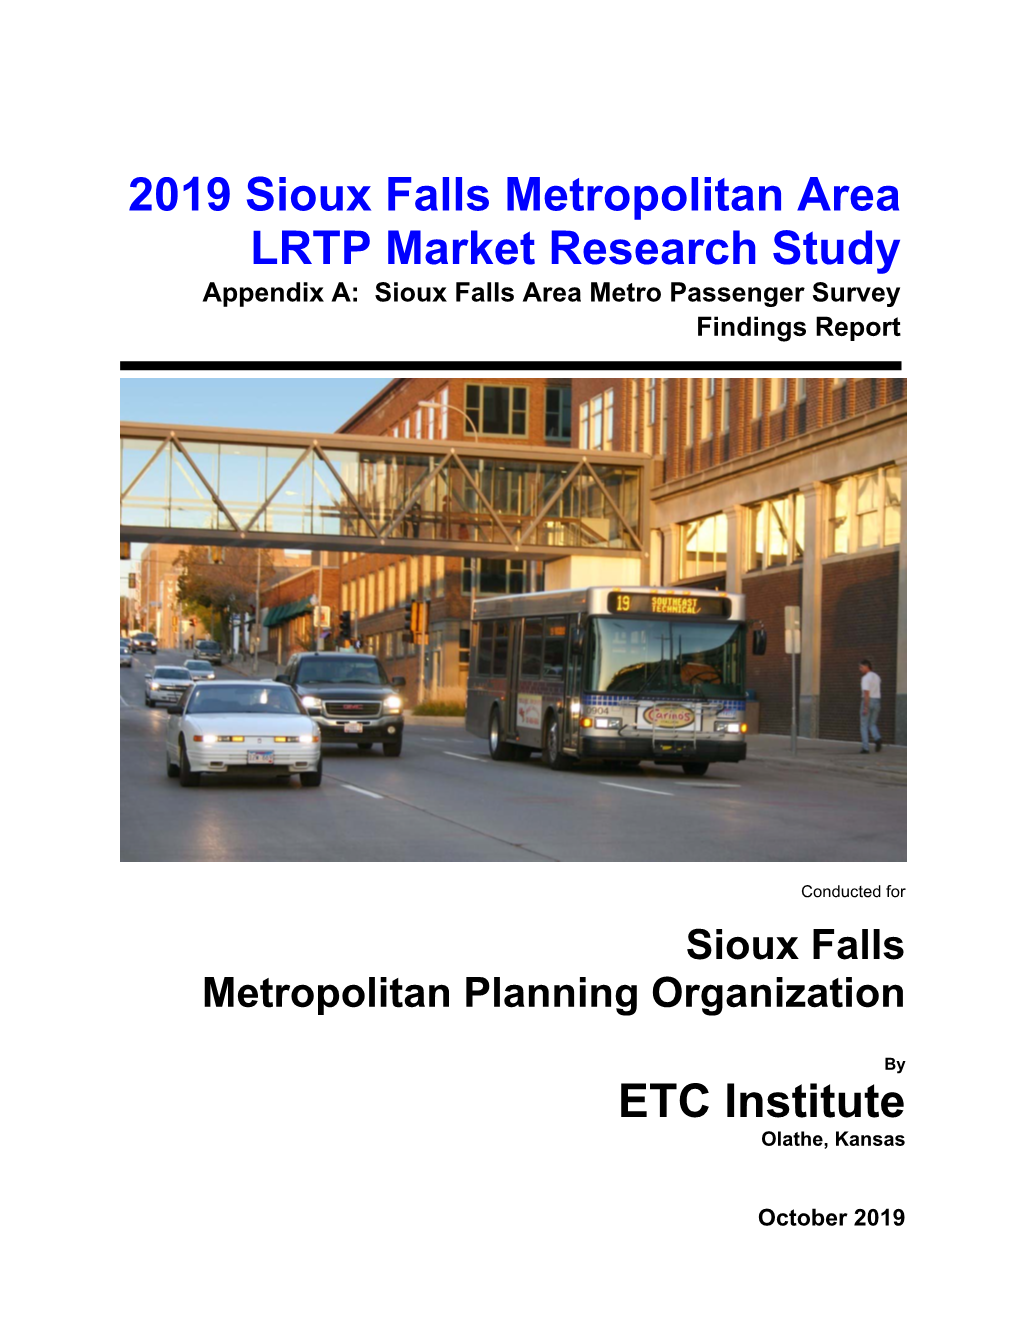 Sioux Falls Area Metro Passenger Survey Findings Report